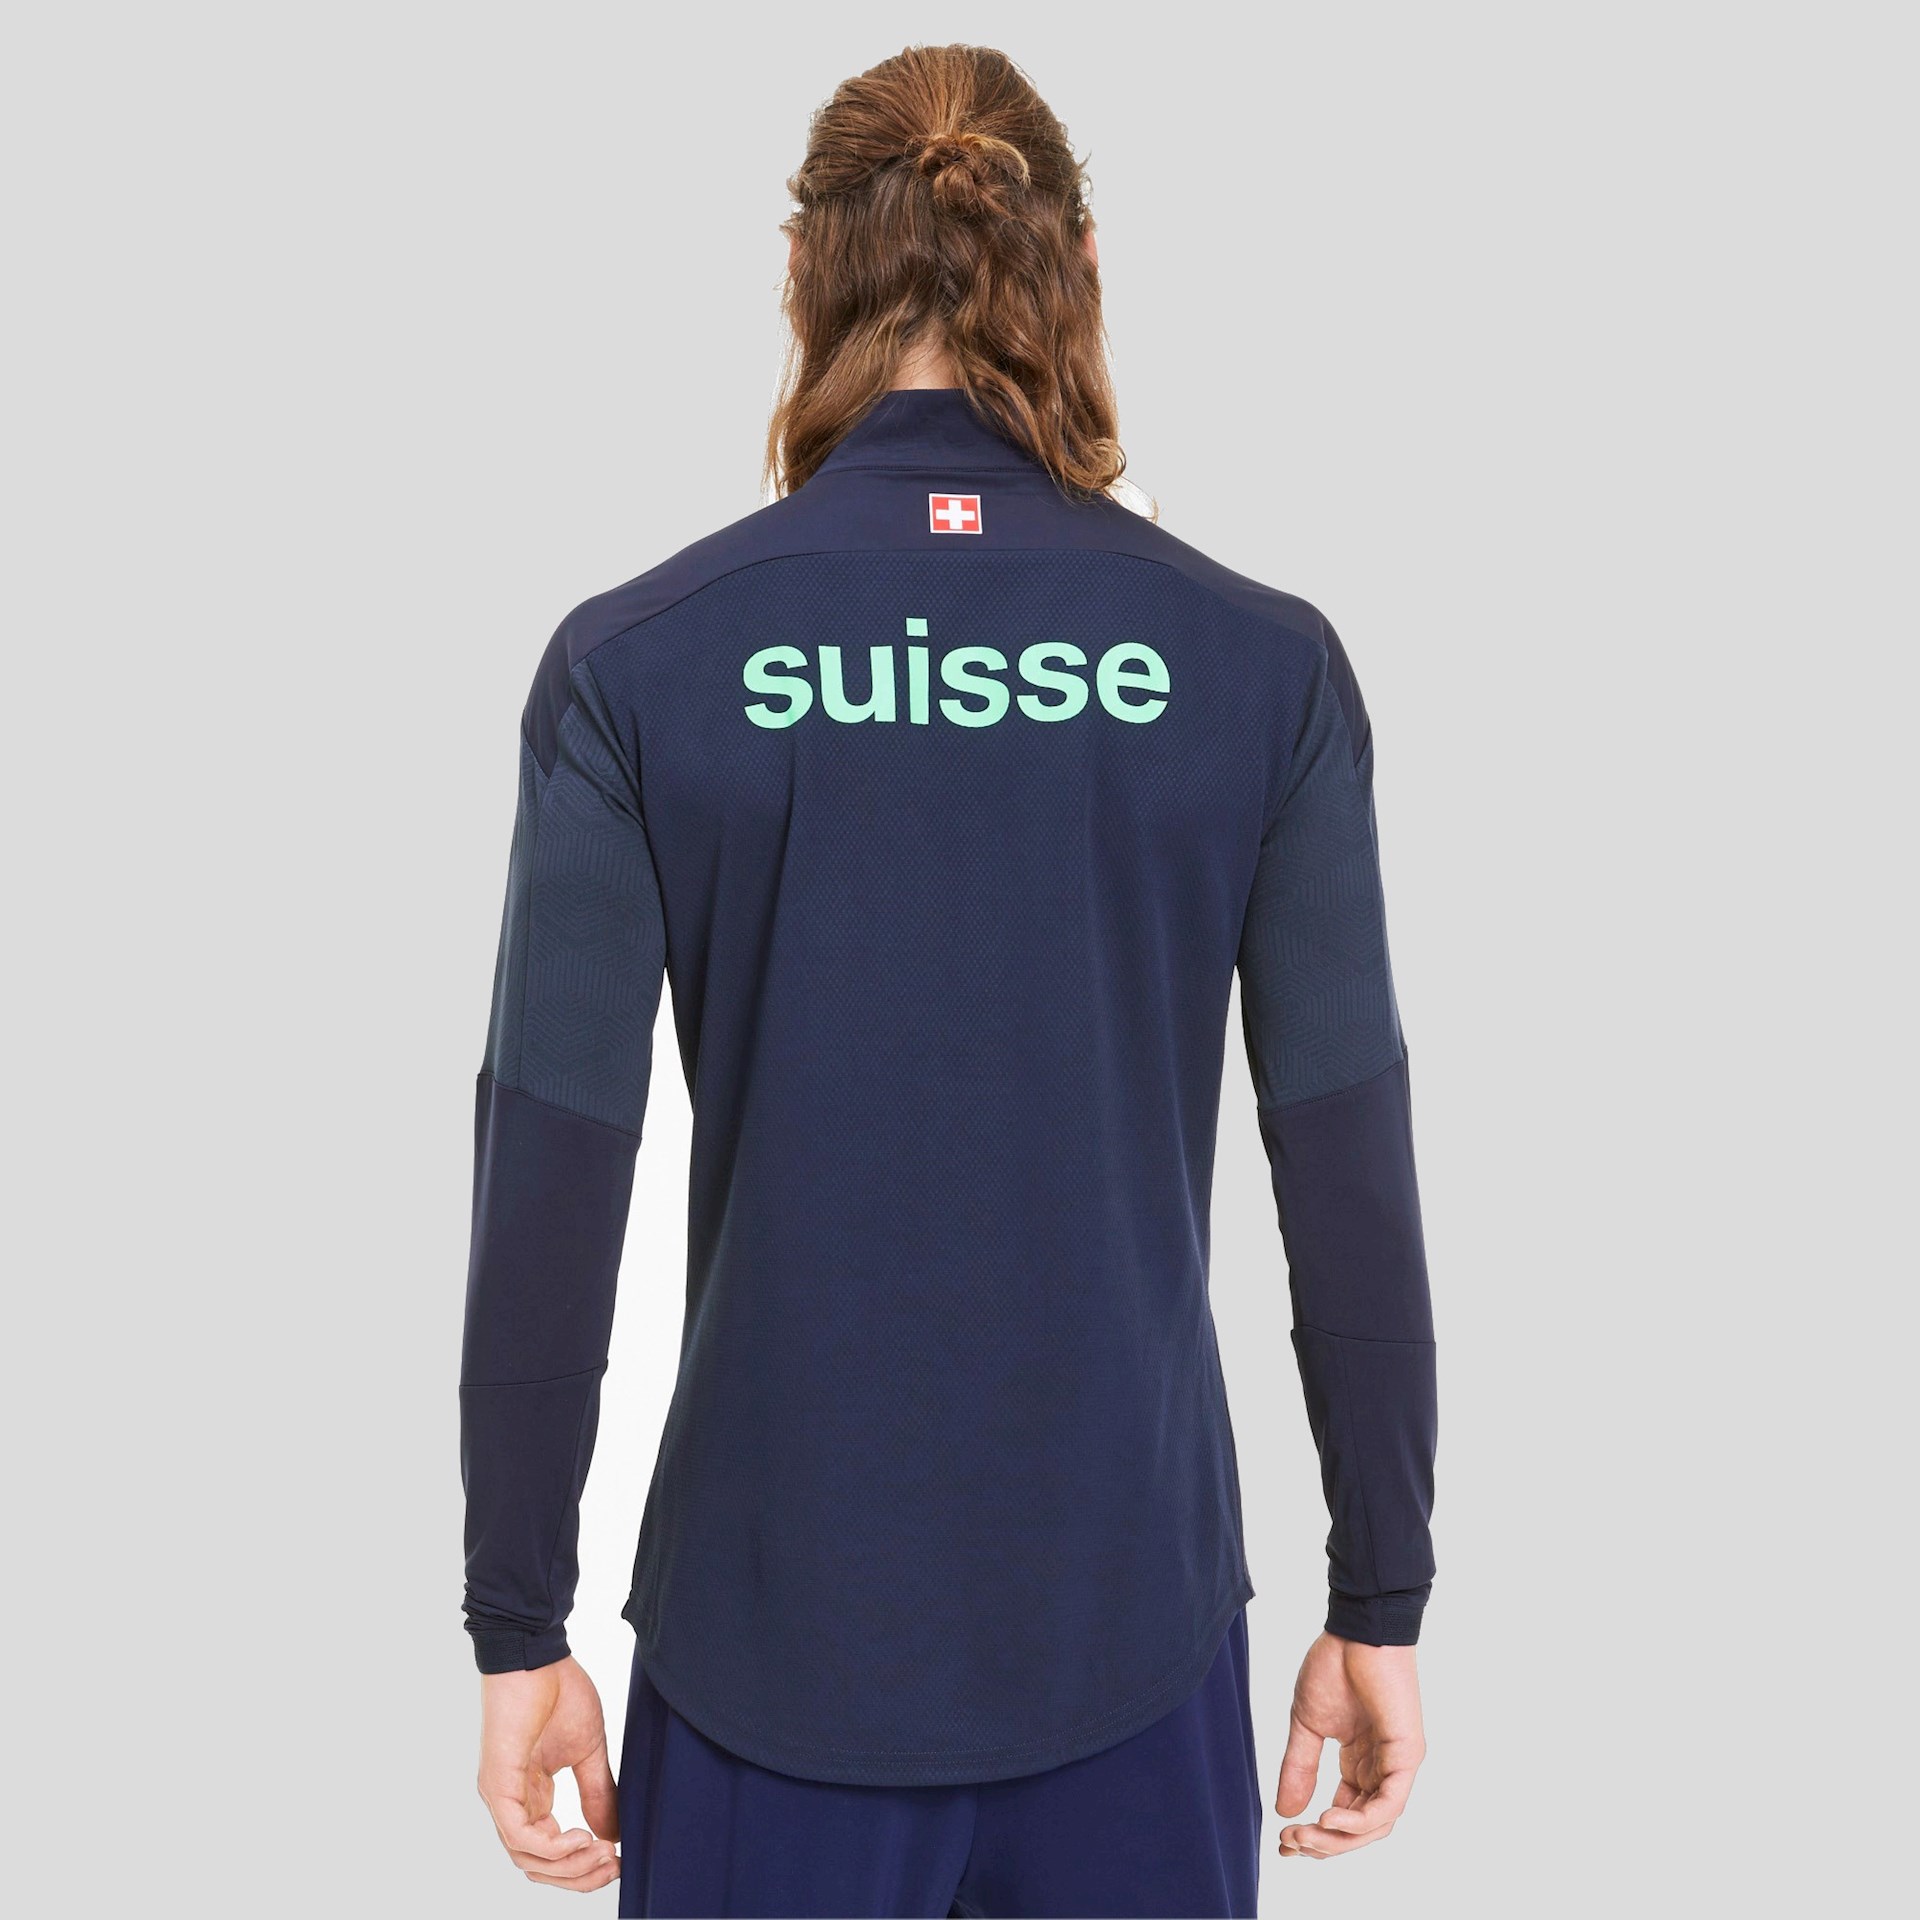 Zwitserland trainingspak 2020-2021 - Voetbalshirts.com